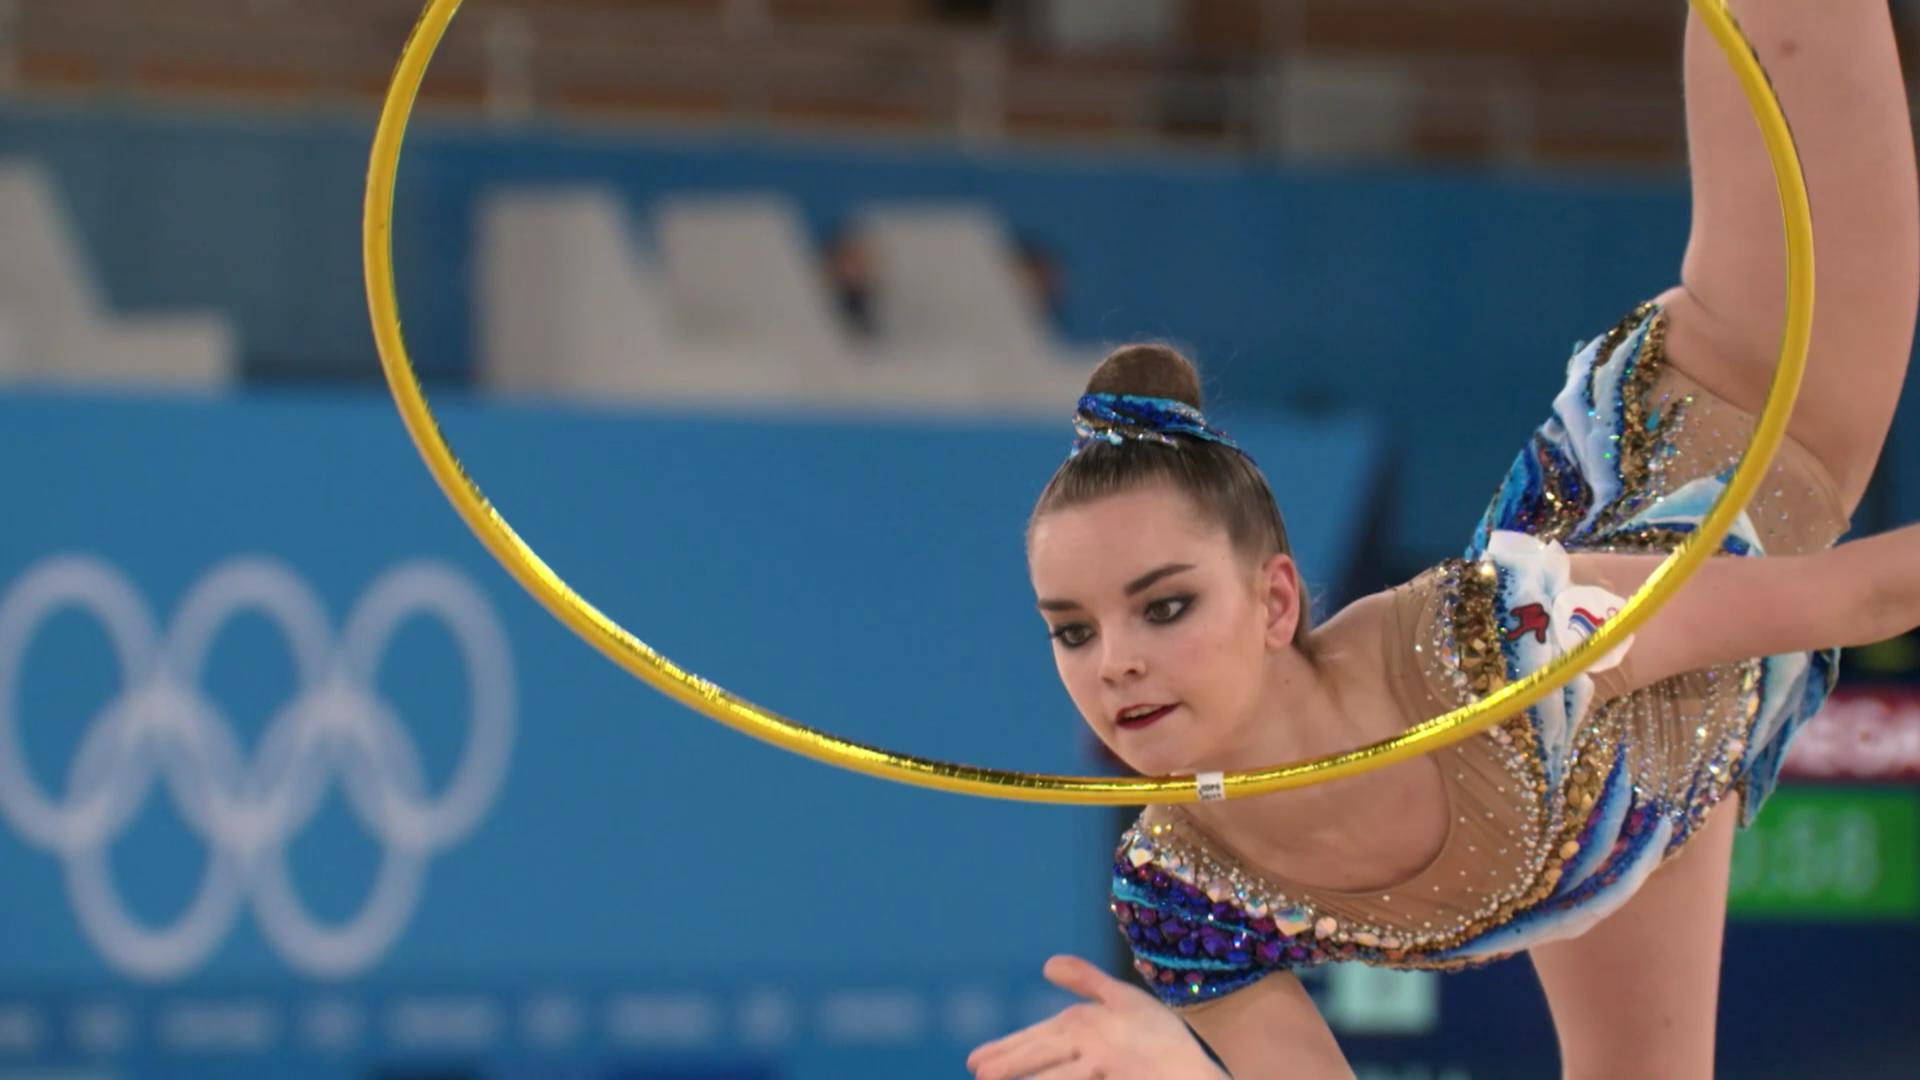 Averina makes strong start at Rhythmic Gymnastics World Championships